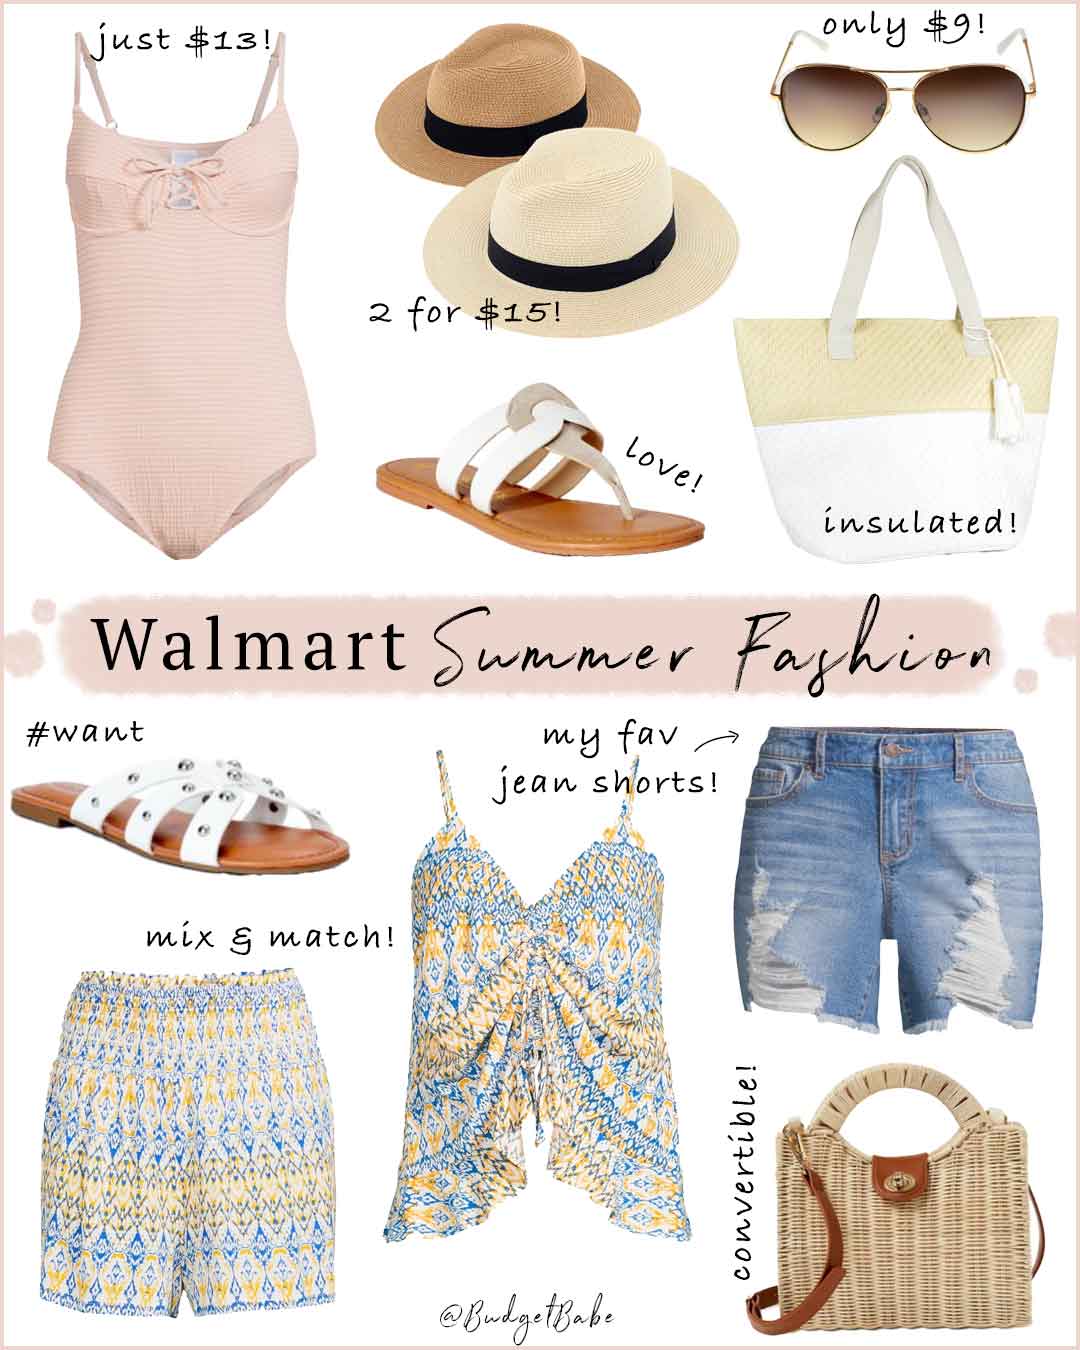 Walmart Summer Fashion Picks | The Budget Babe affordable style blog